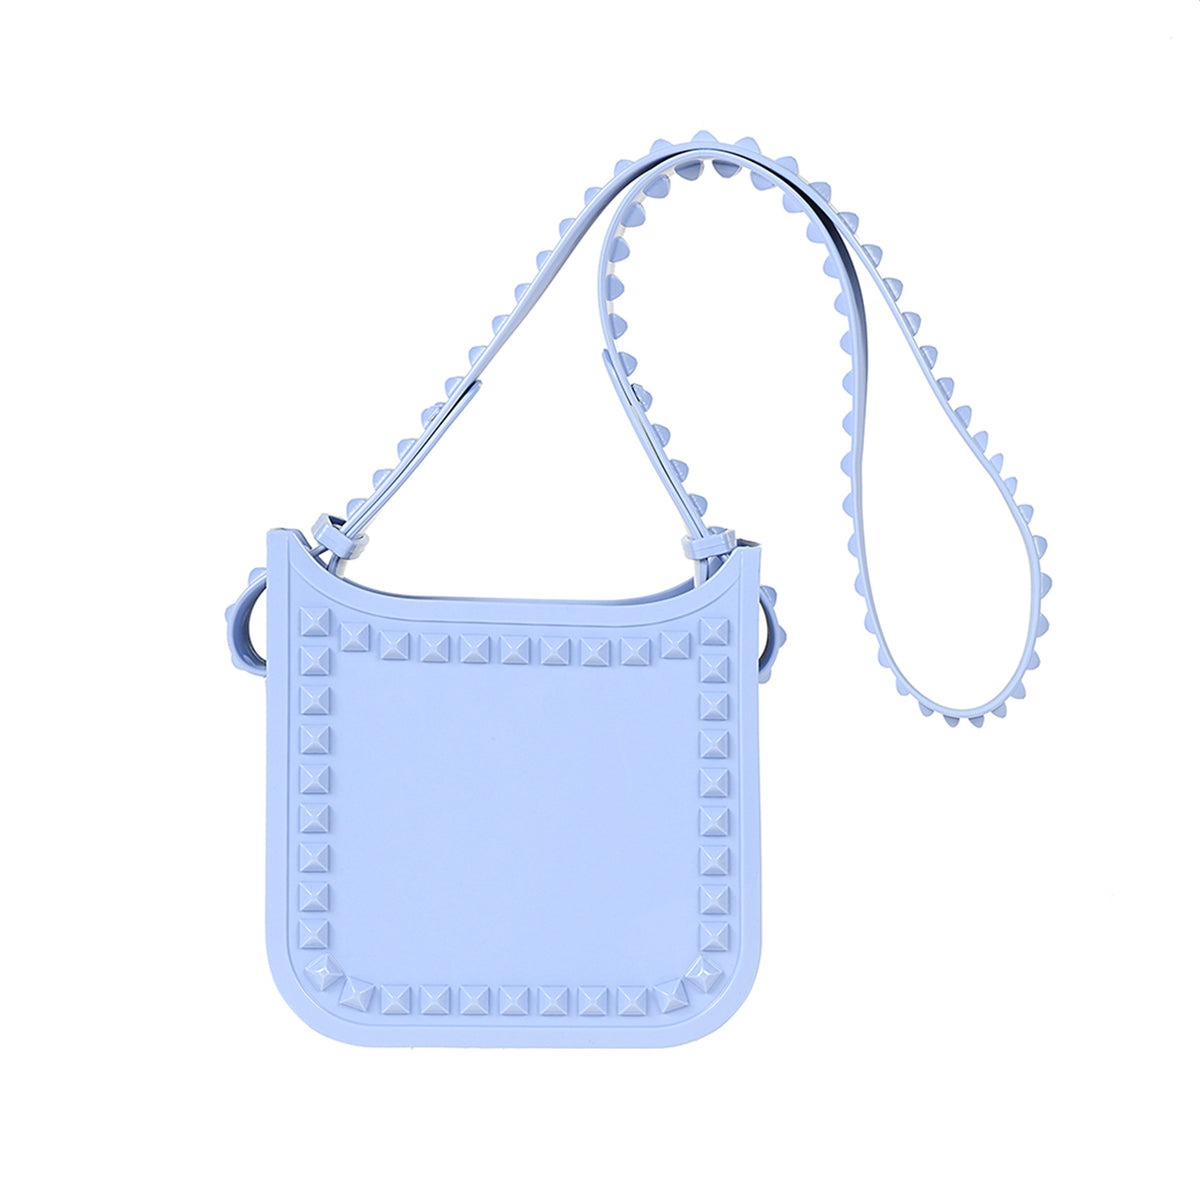 Lisa small crossbody beach purse on sale from Carmen Sol